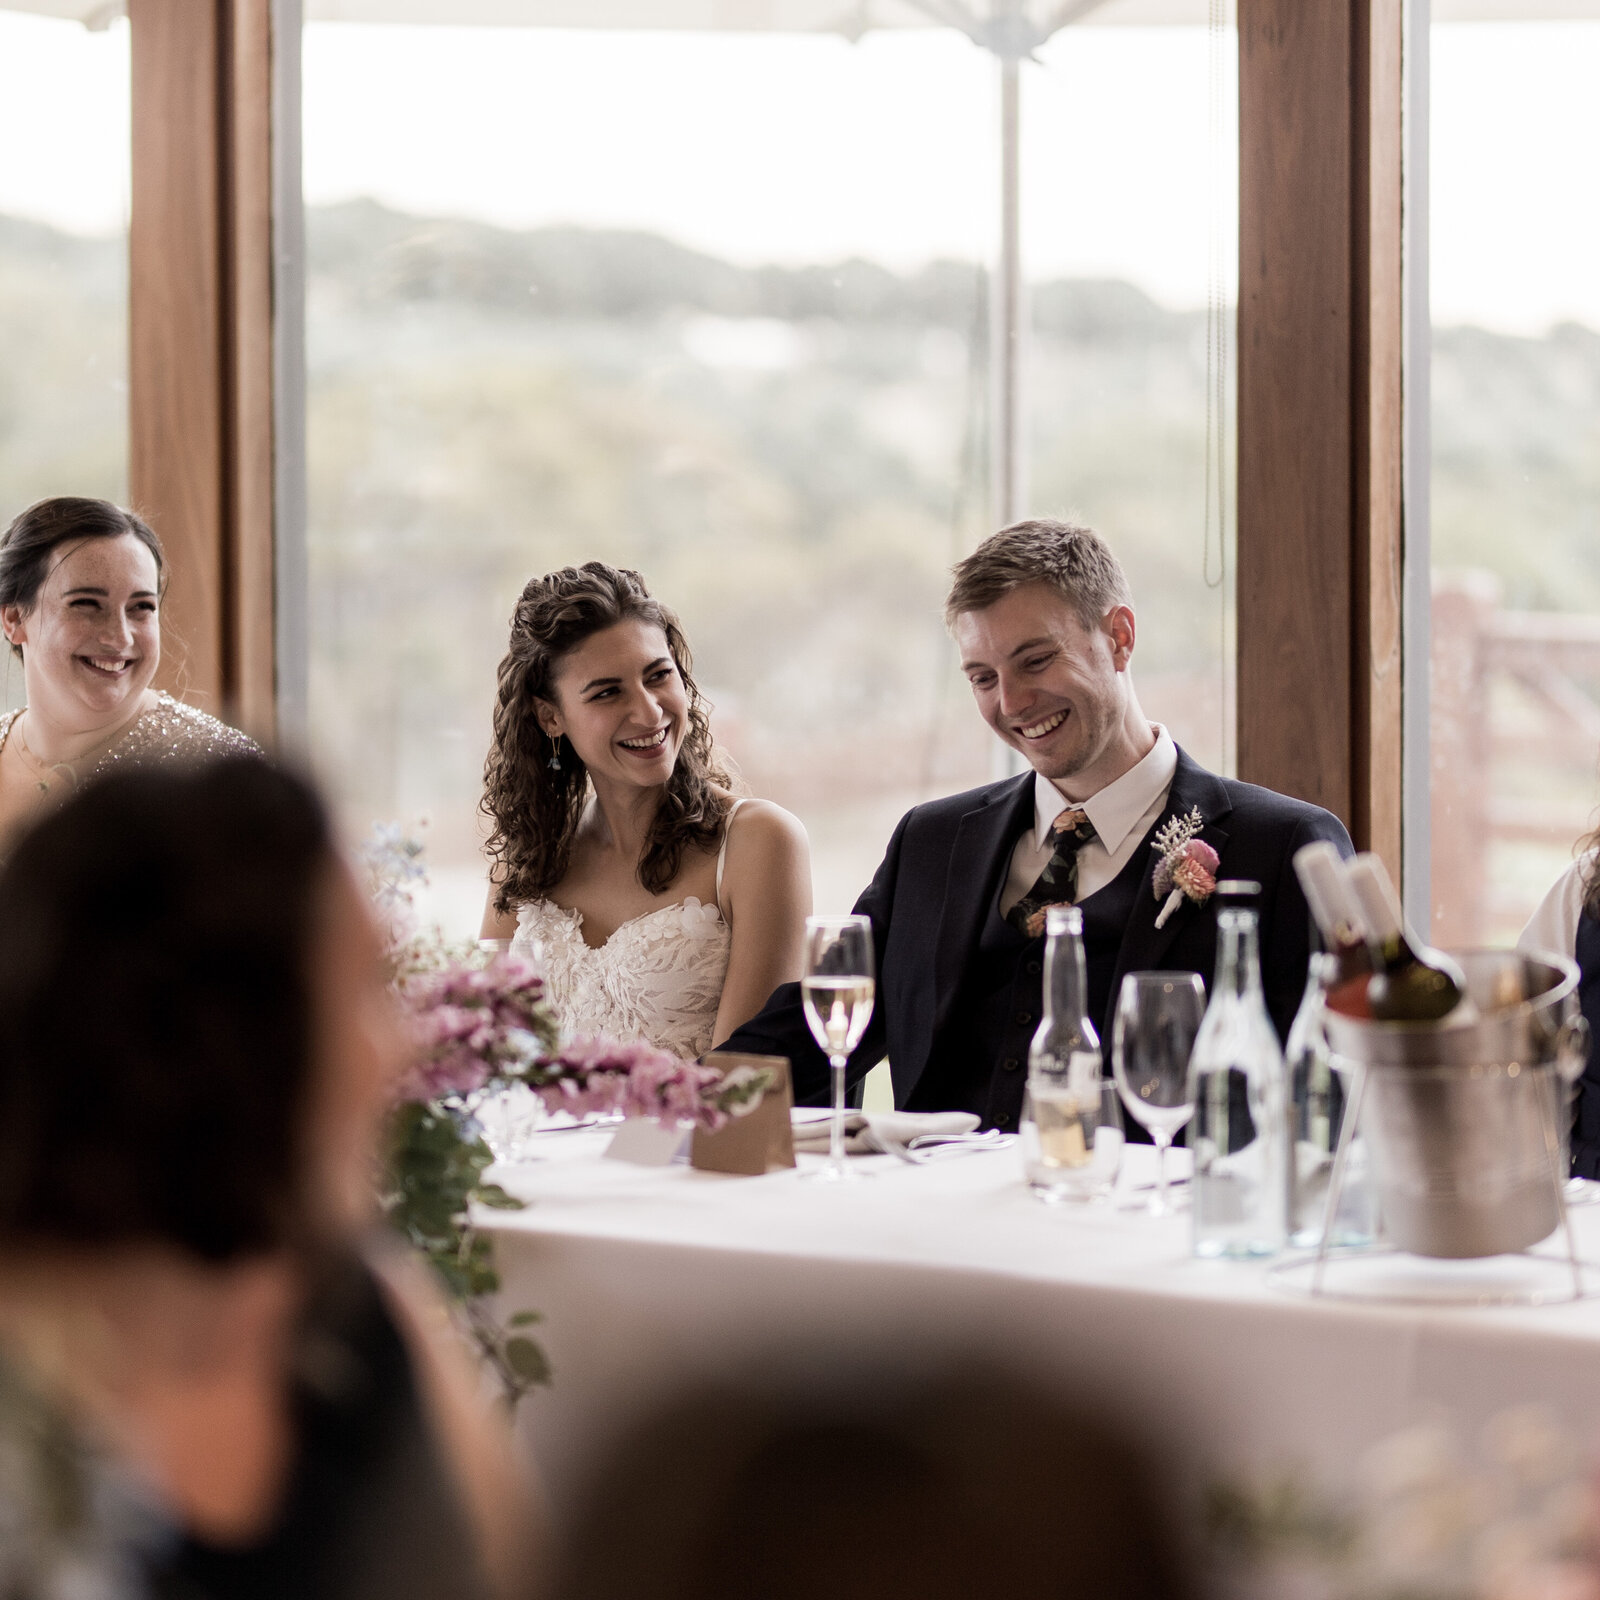 Emily-Ben-Rexvil-Photography-Adelaide-Wedding-Photographer-518